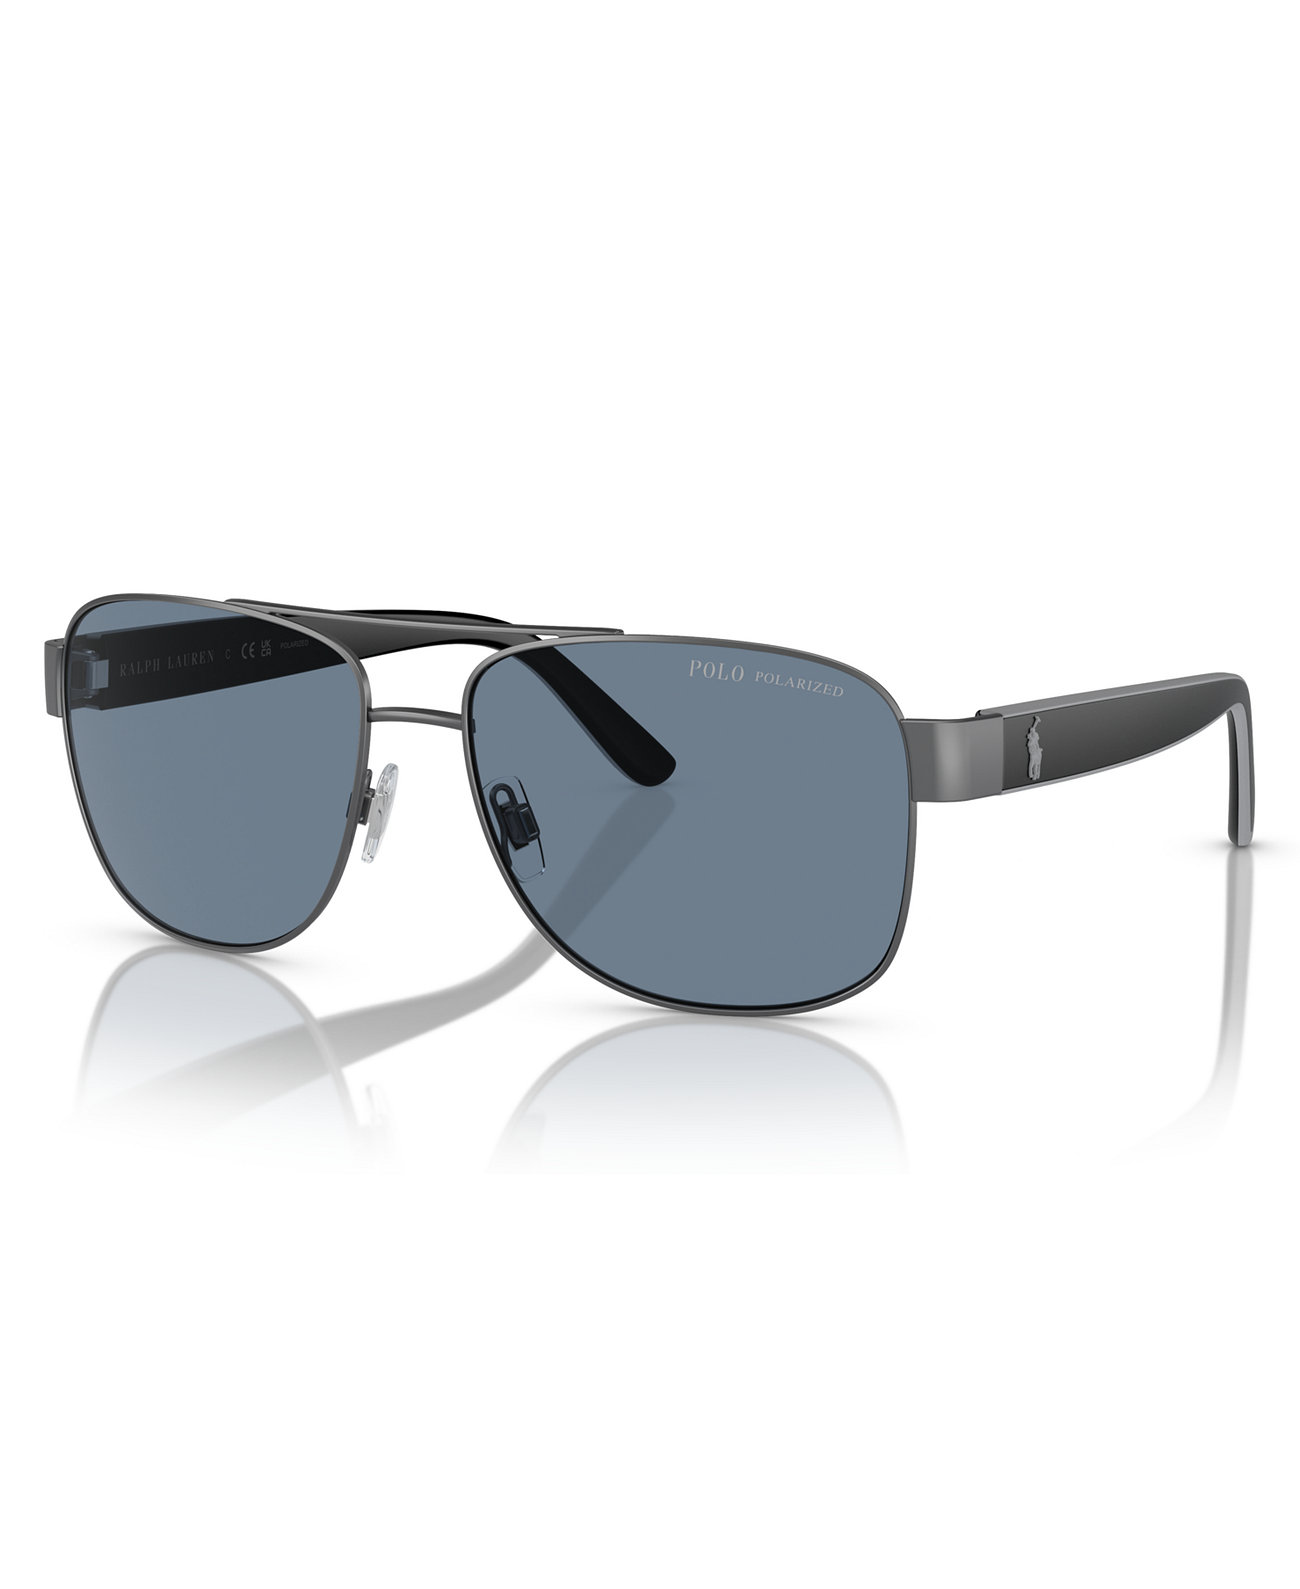 Men's Polarized Sunglasses, Polar PH3122 Polo Ralph Lauren